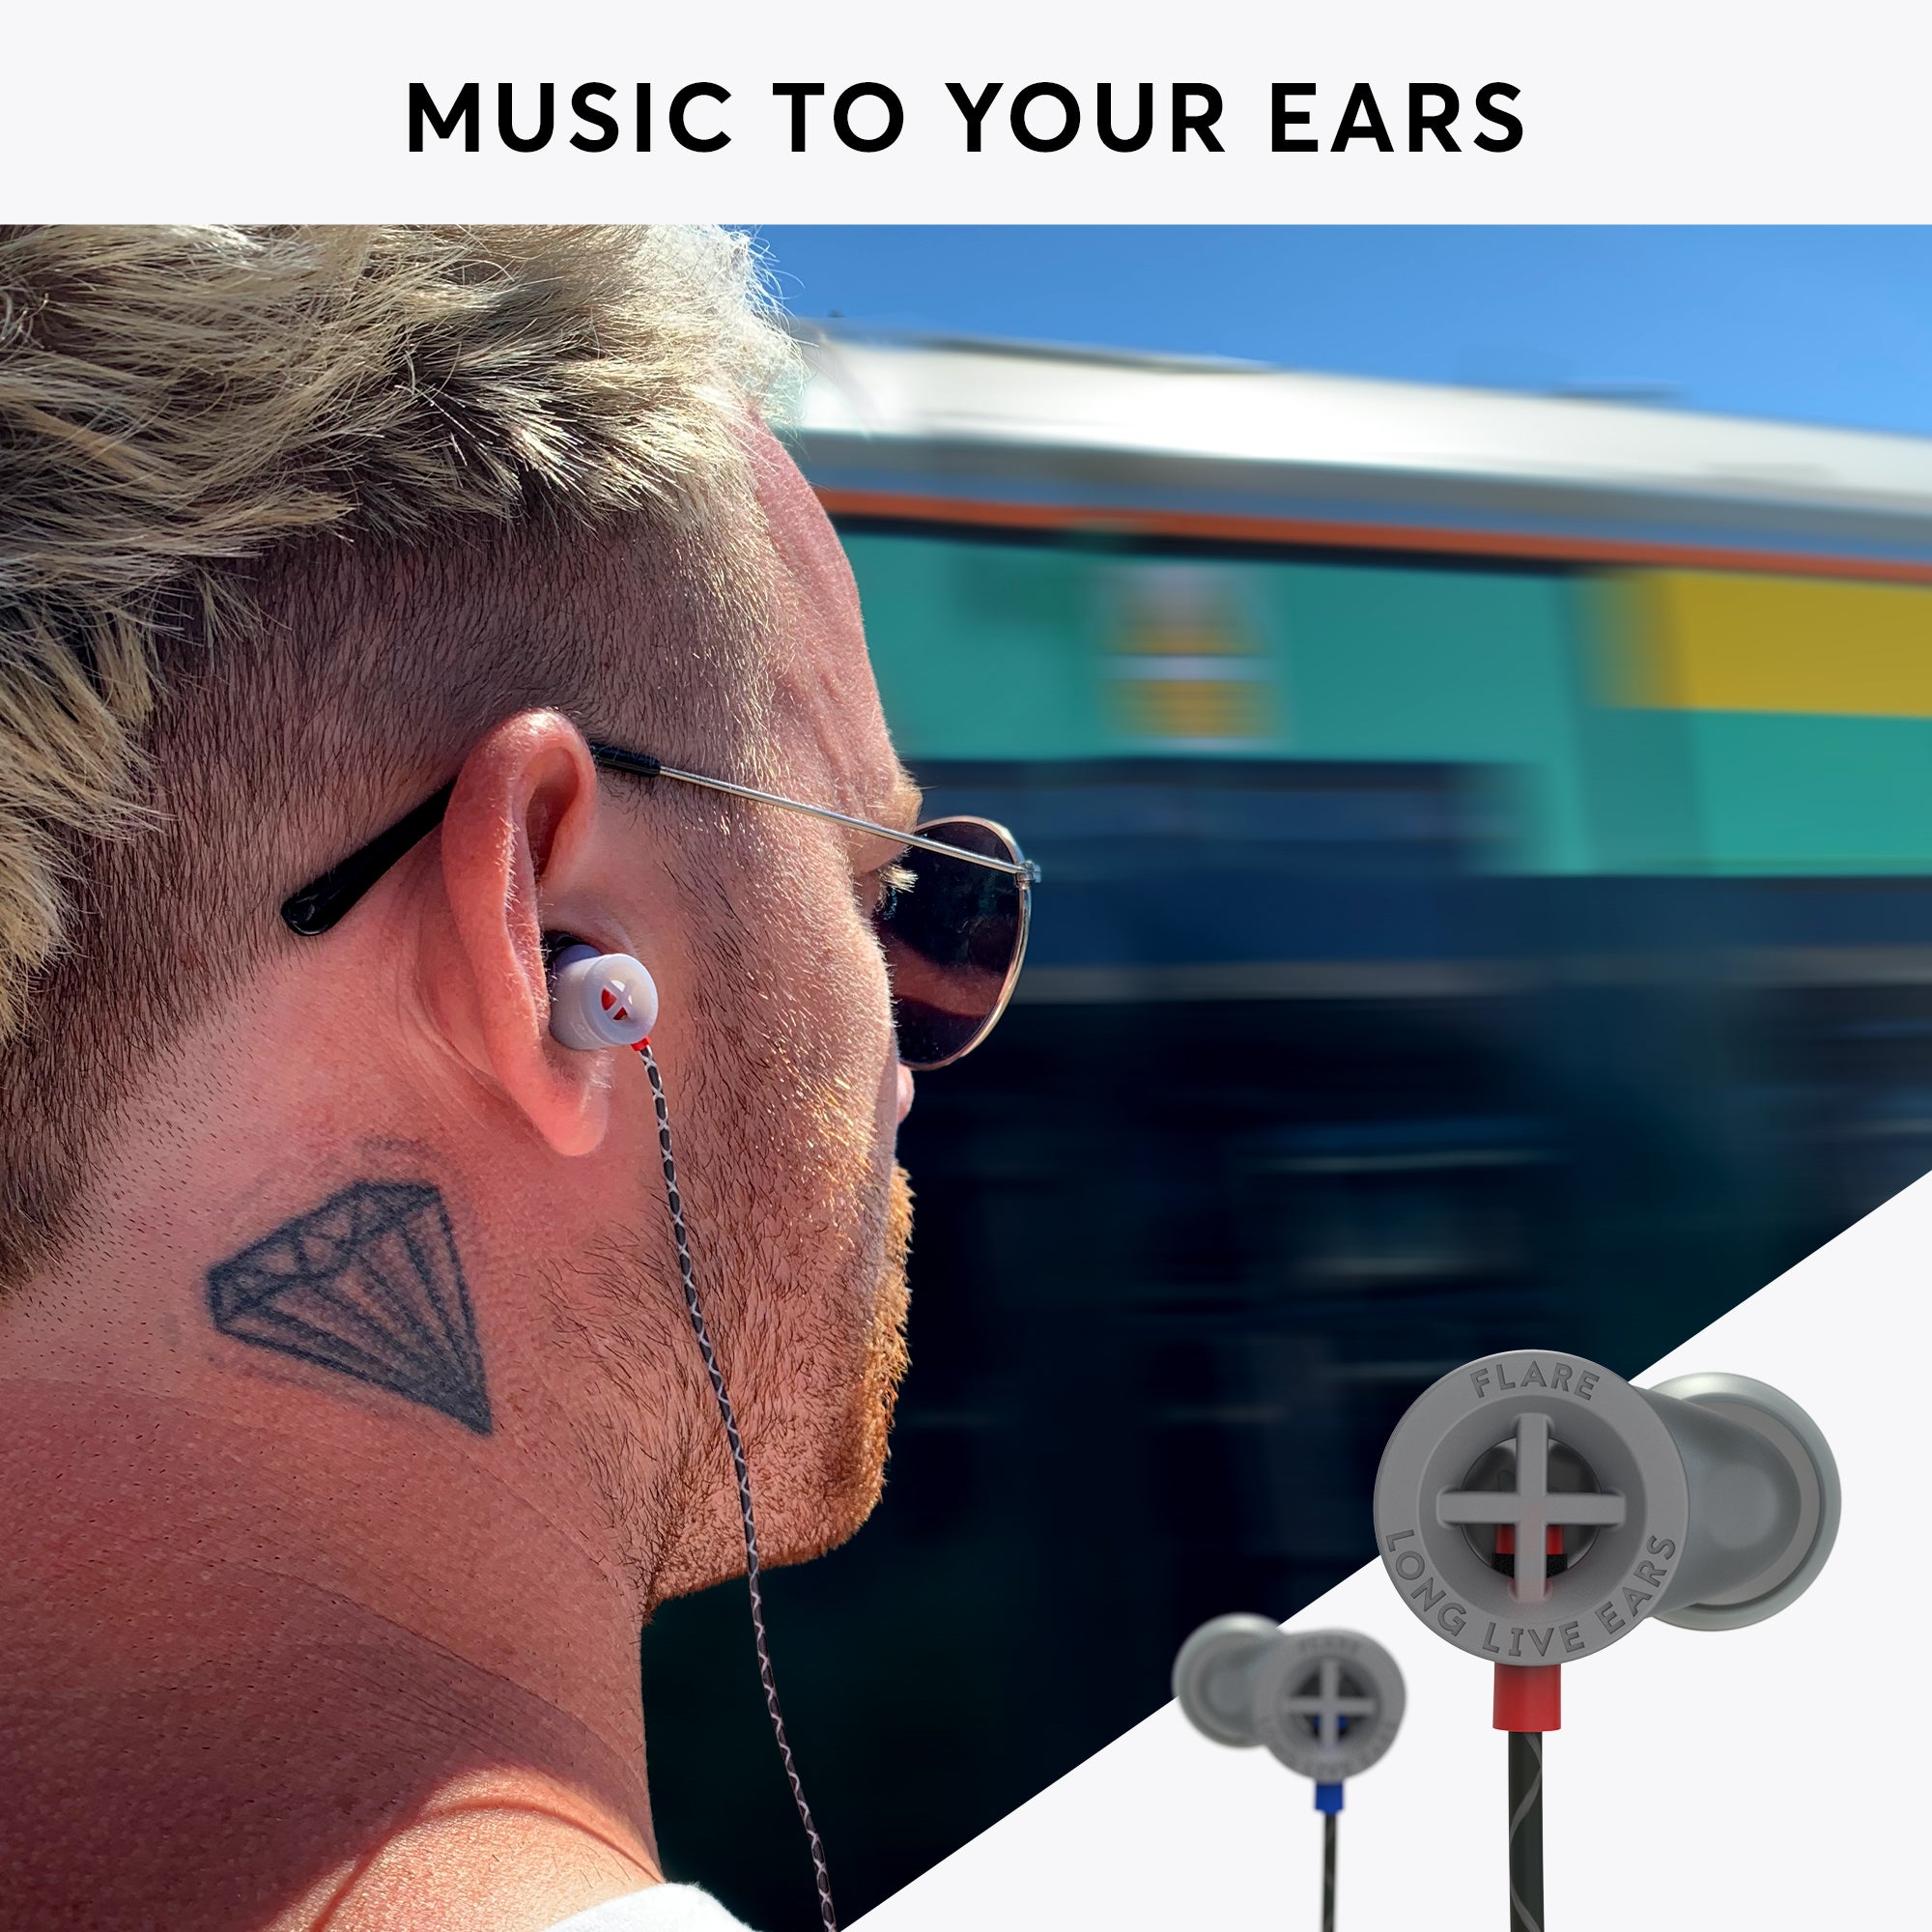 earHD® 90 – Flare Audio Ltd